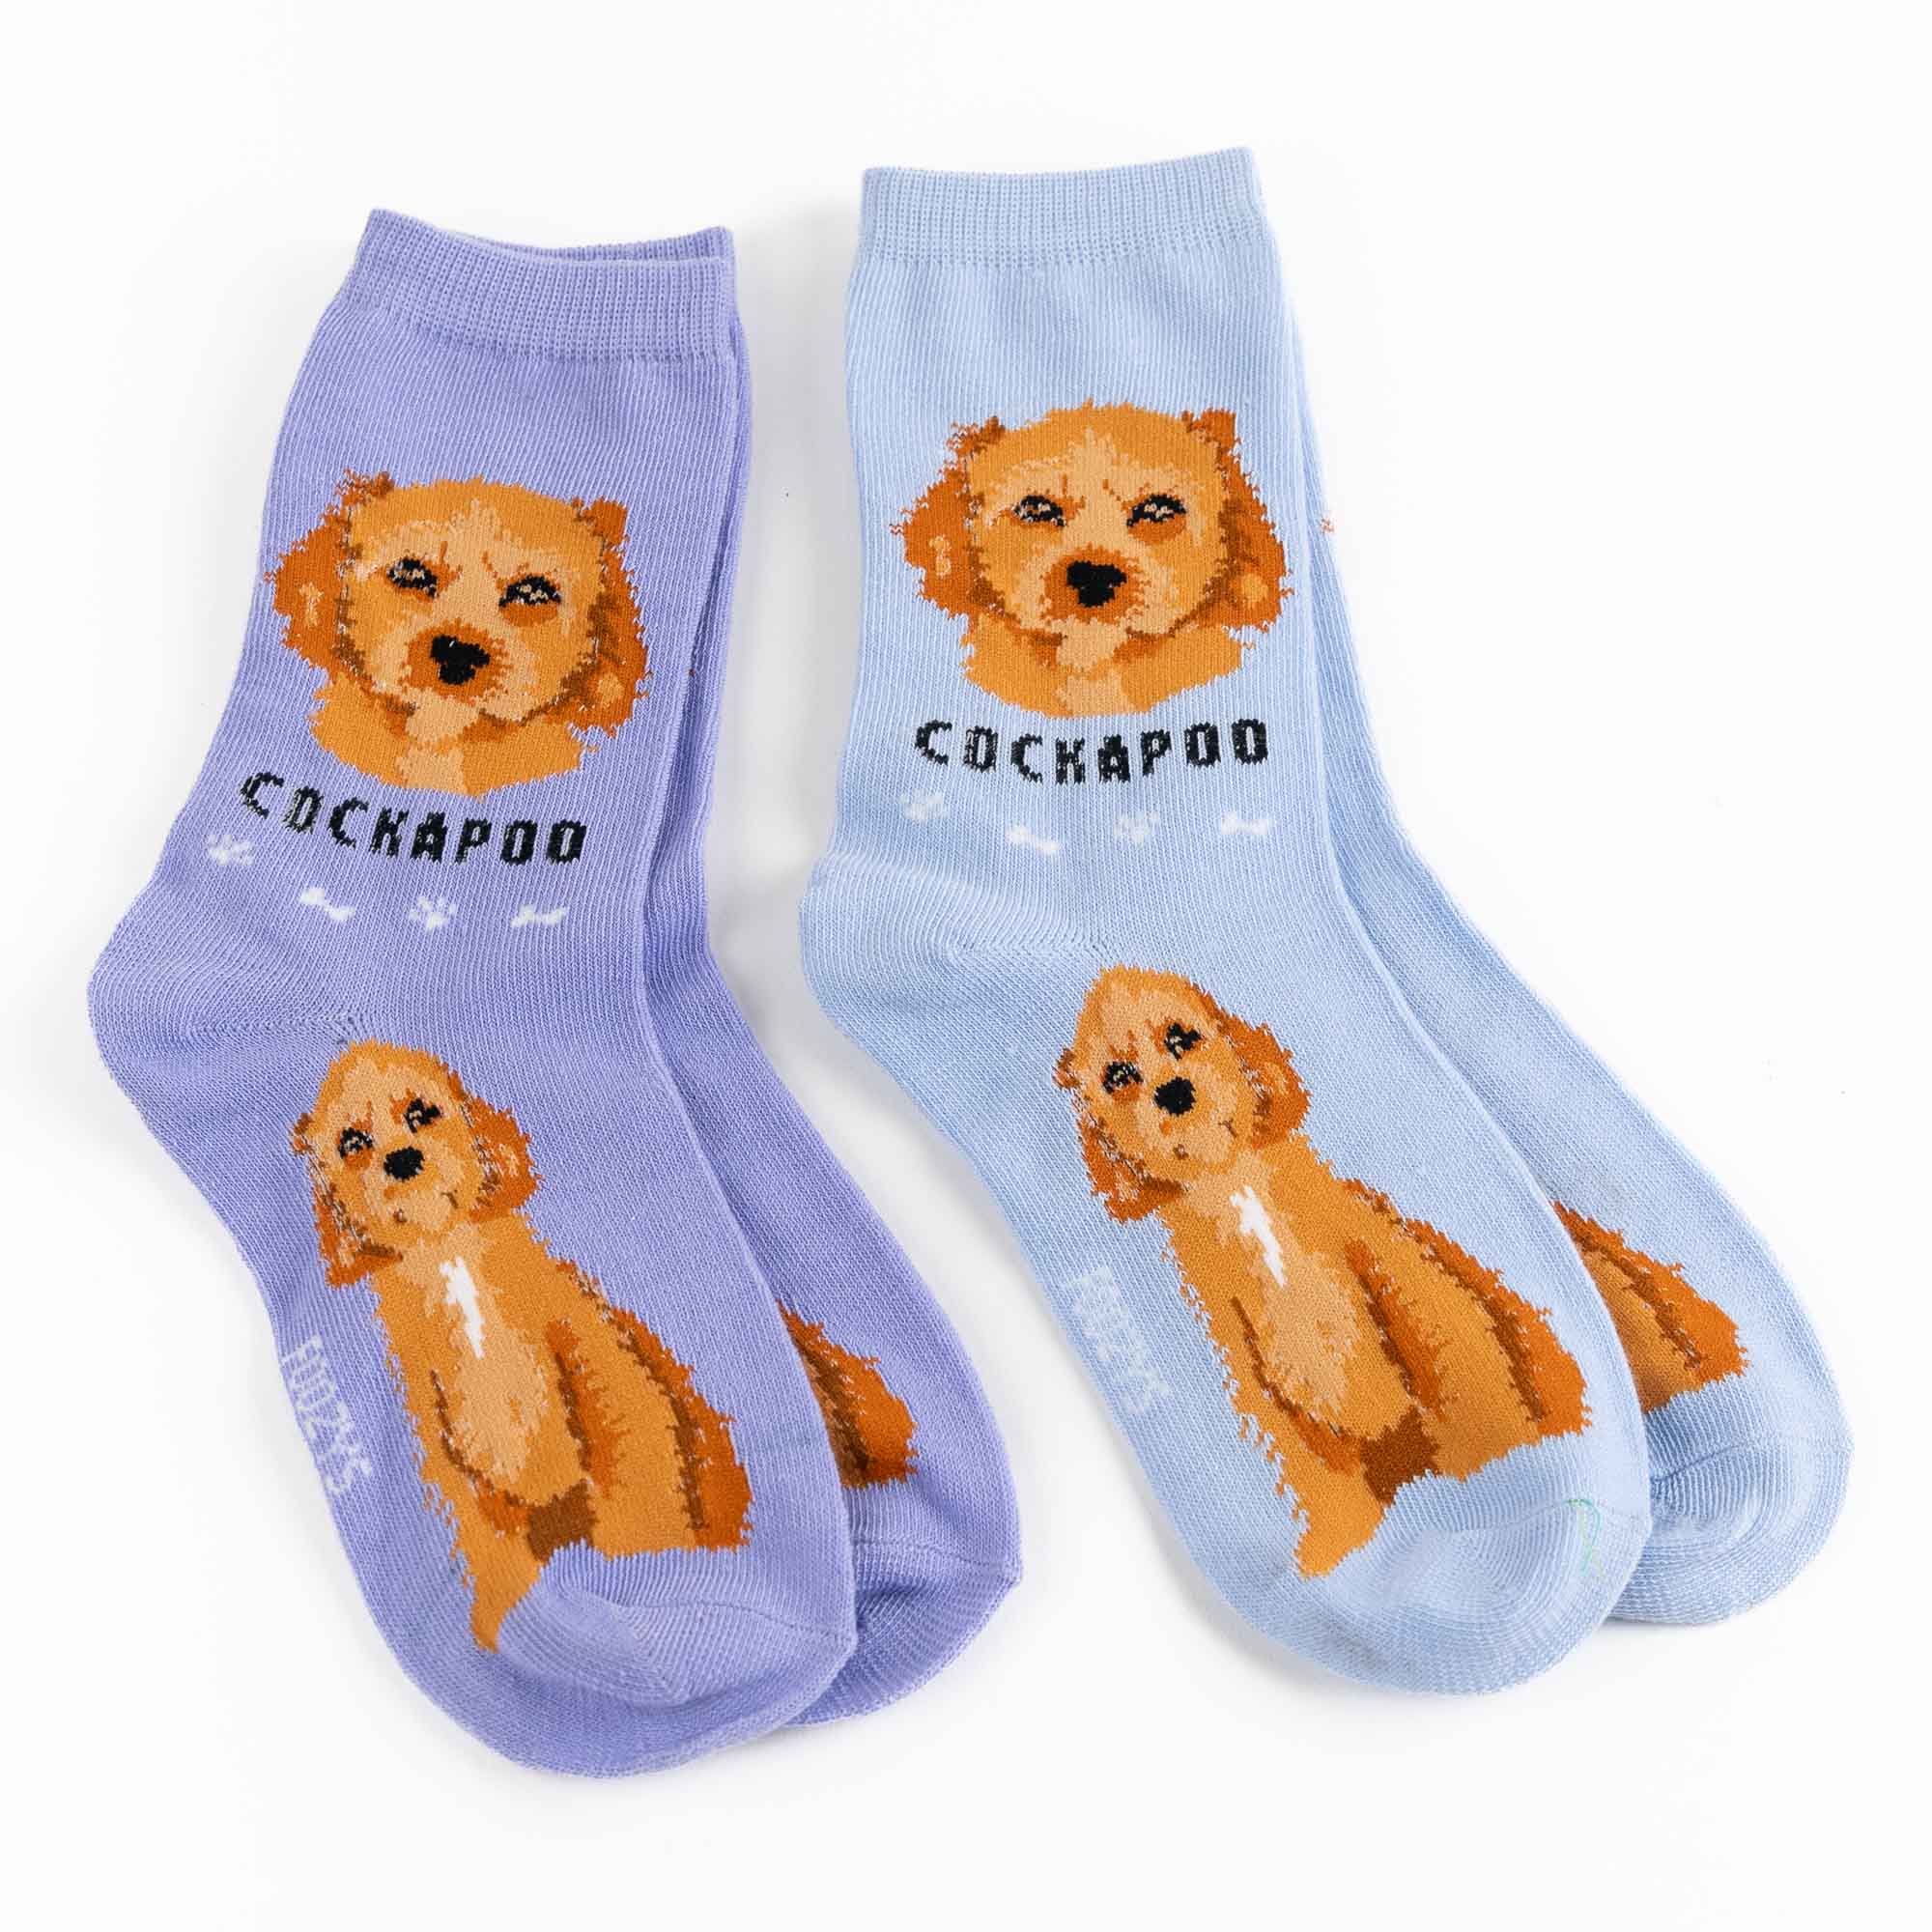 My Favorite Dog Breed Socks ❤️ Cockapoo Breed Dog Socks - 2 Set Collection